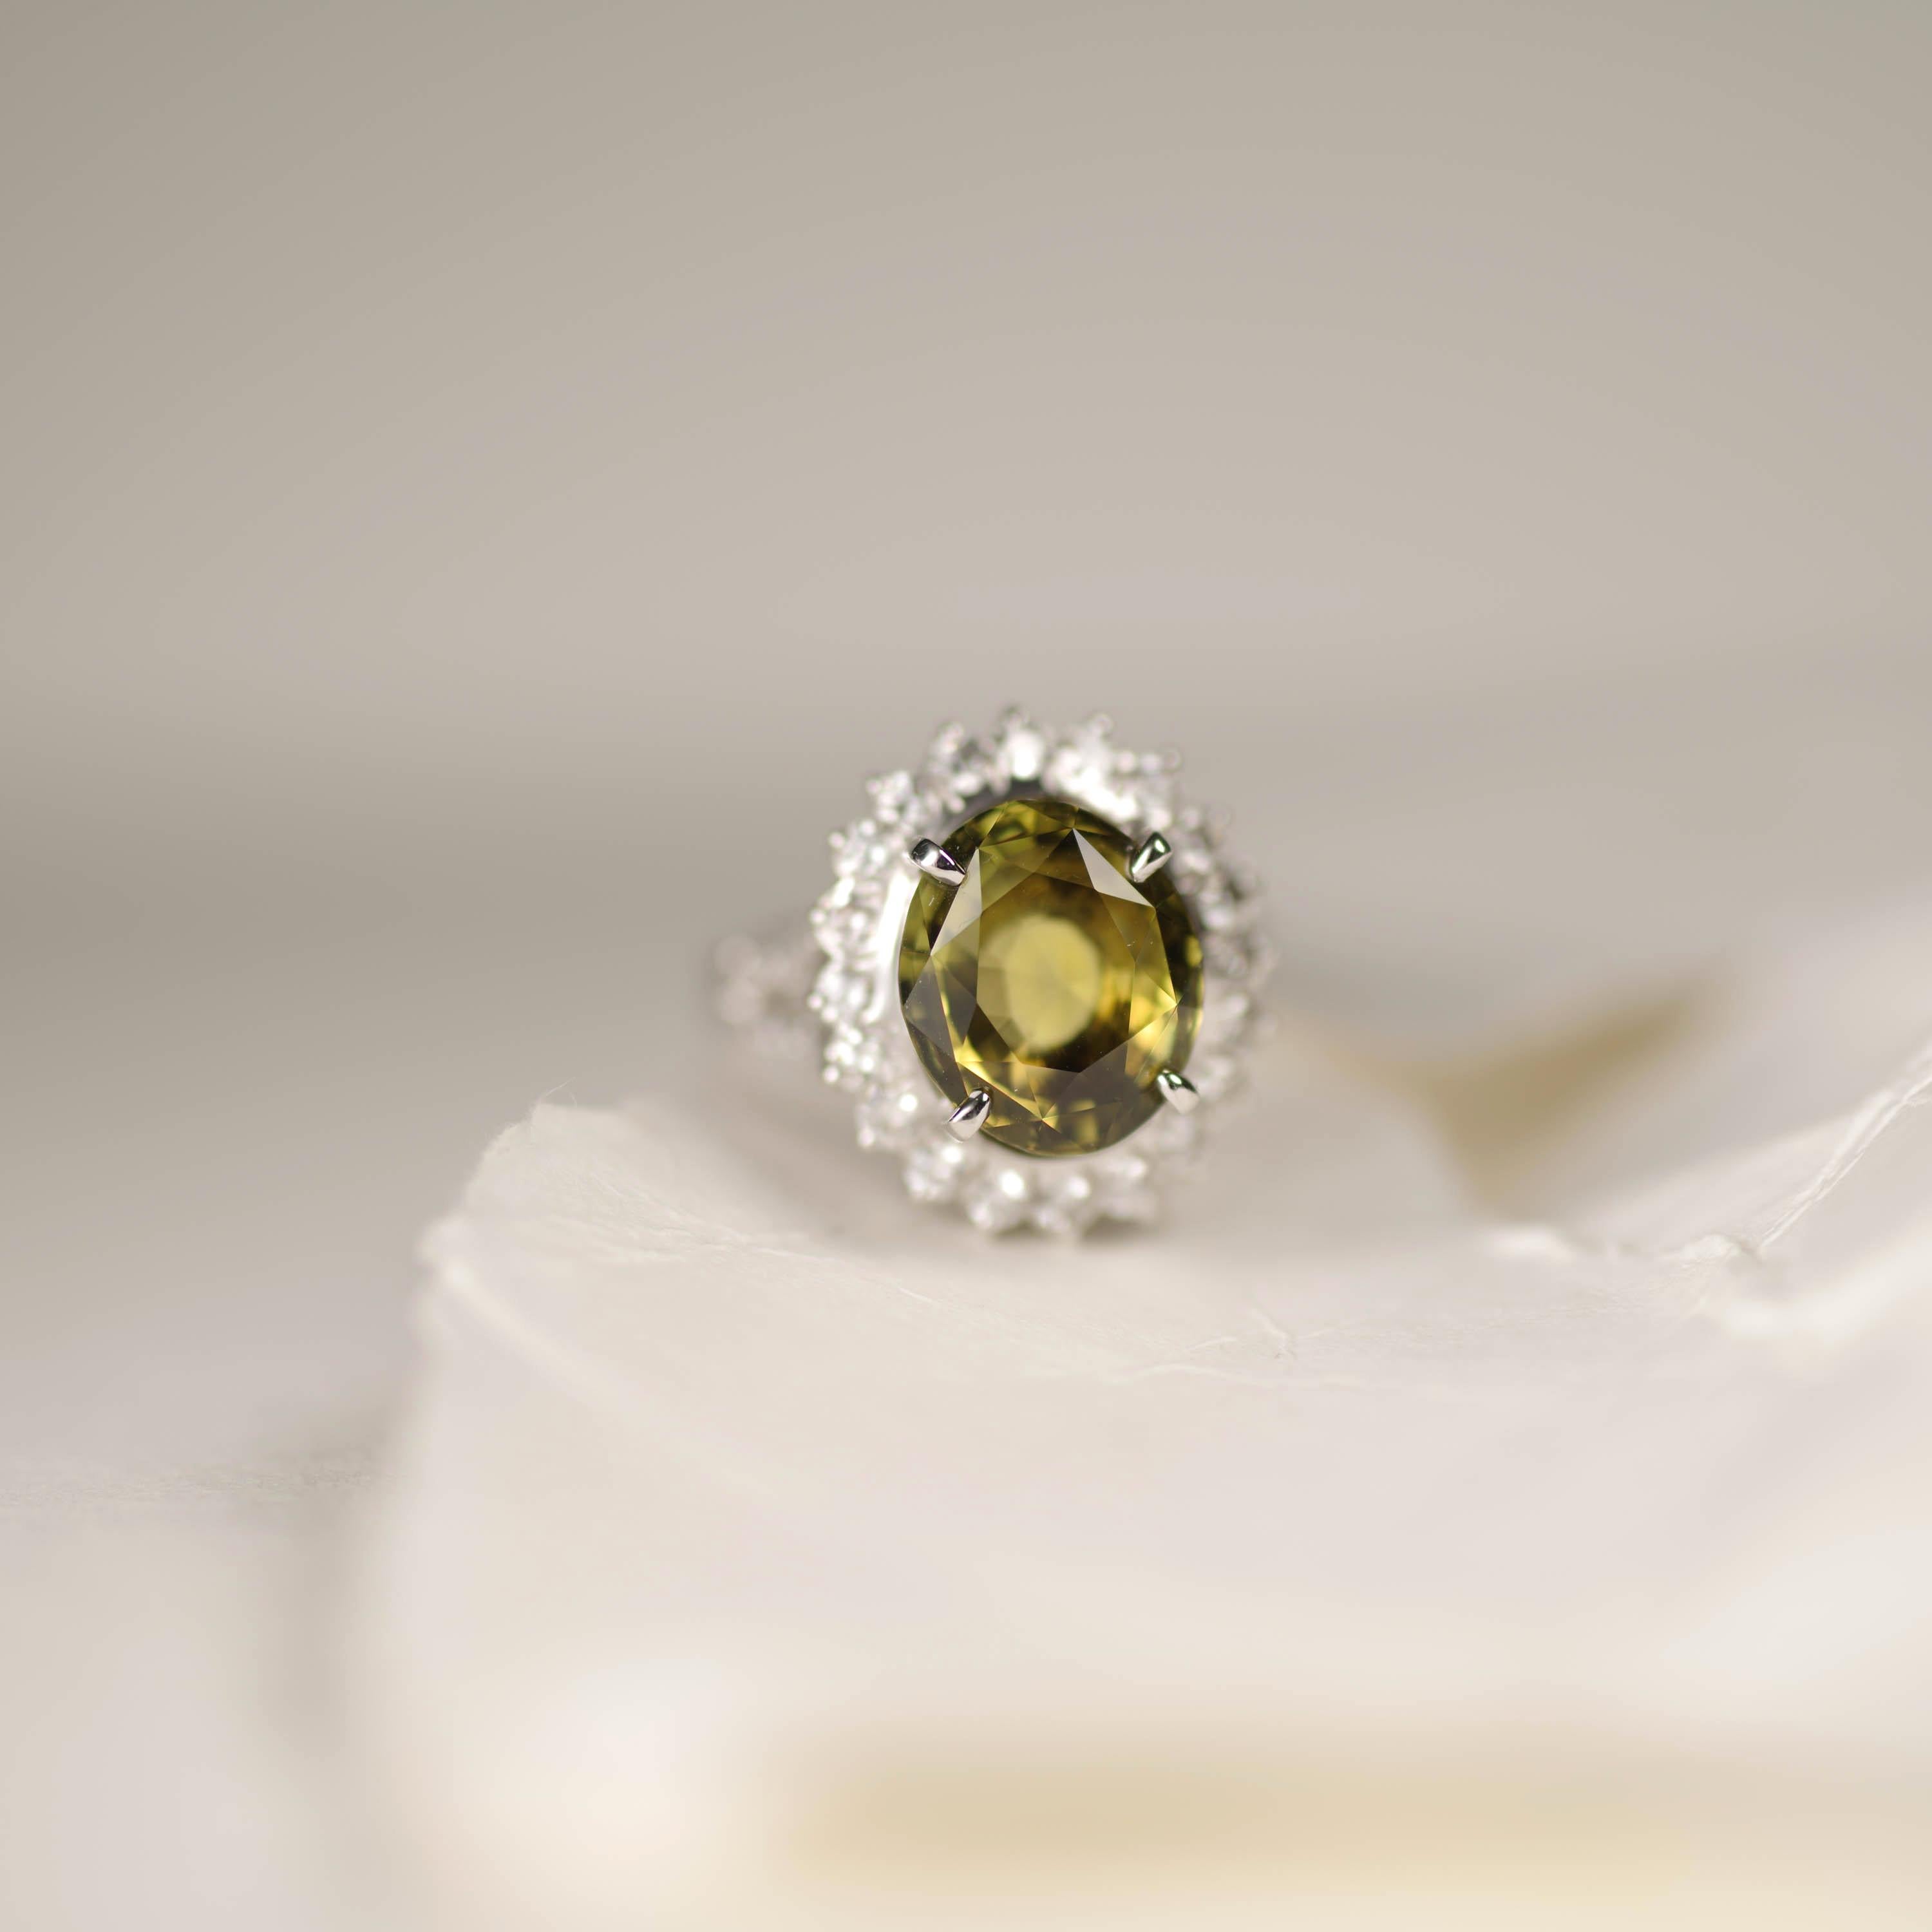 Alexandrite & Diamond Ring 7.35 Carats, Rare Color Change Gem Certified 7